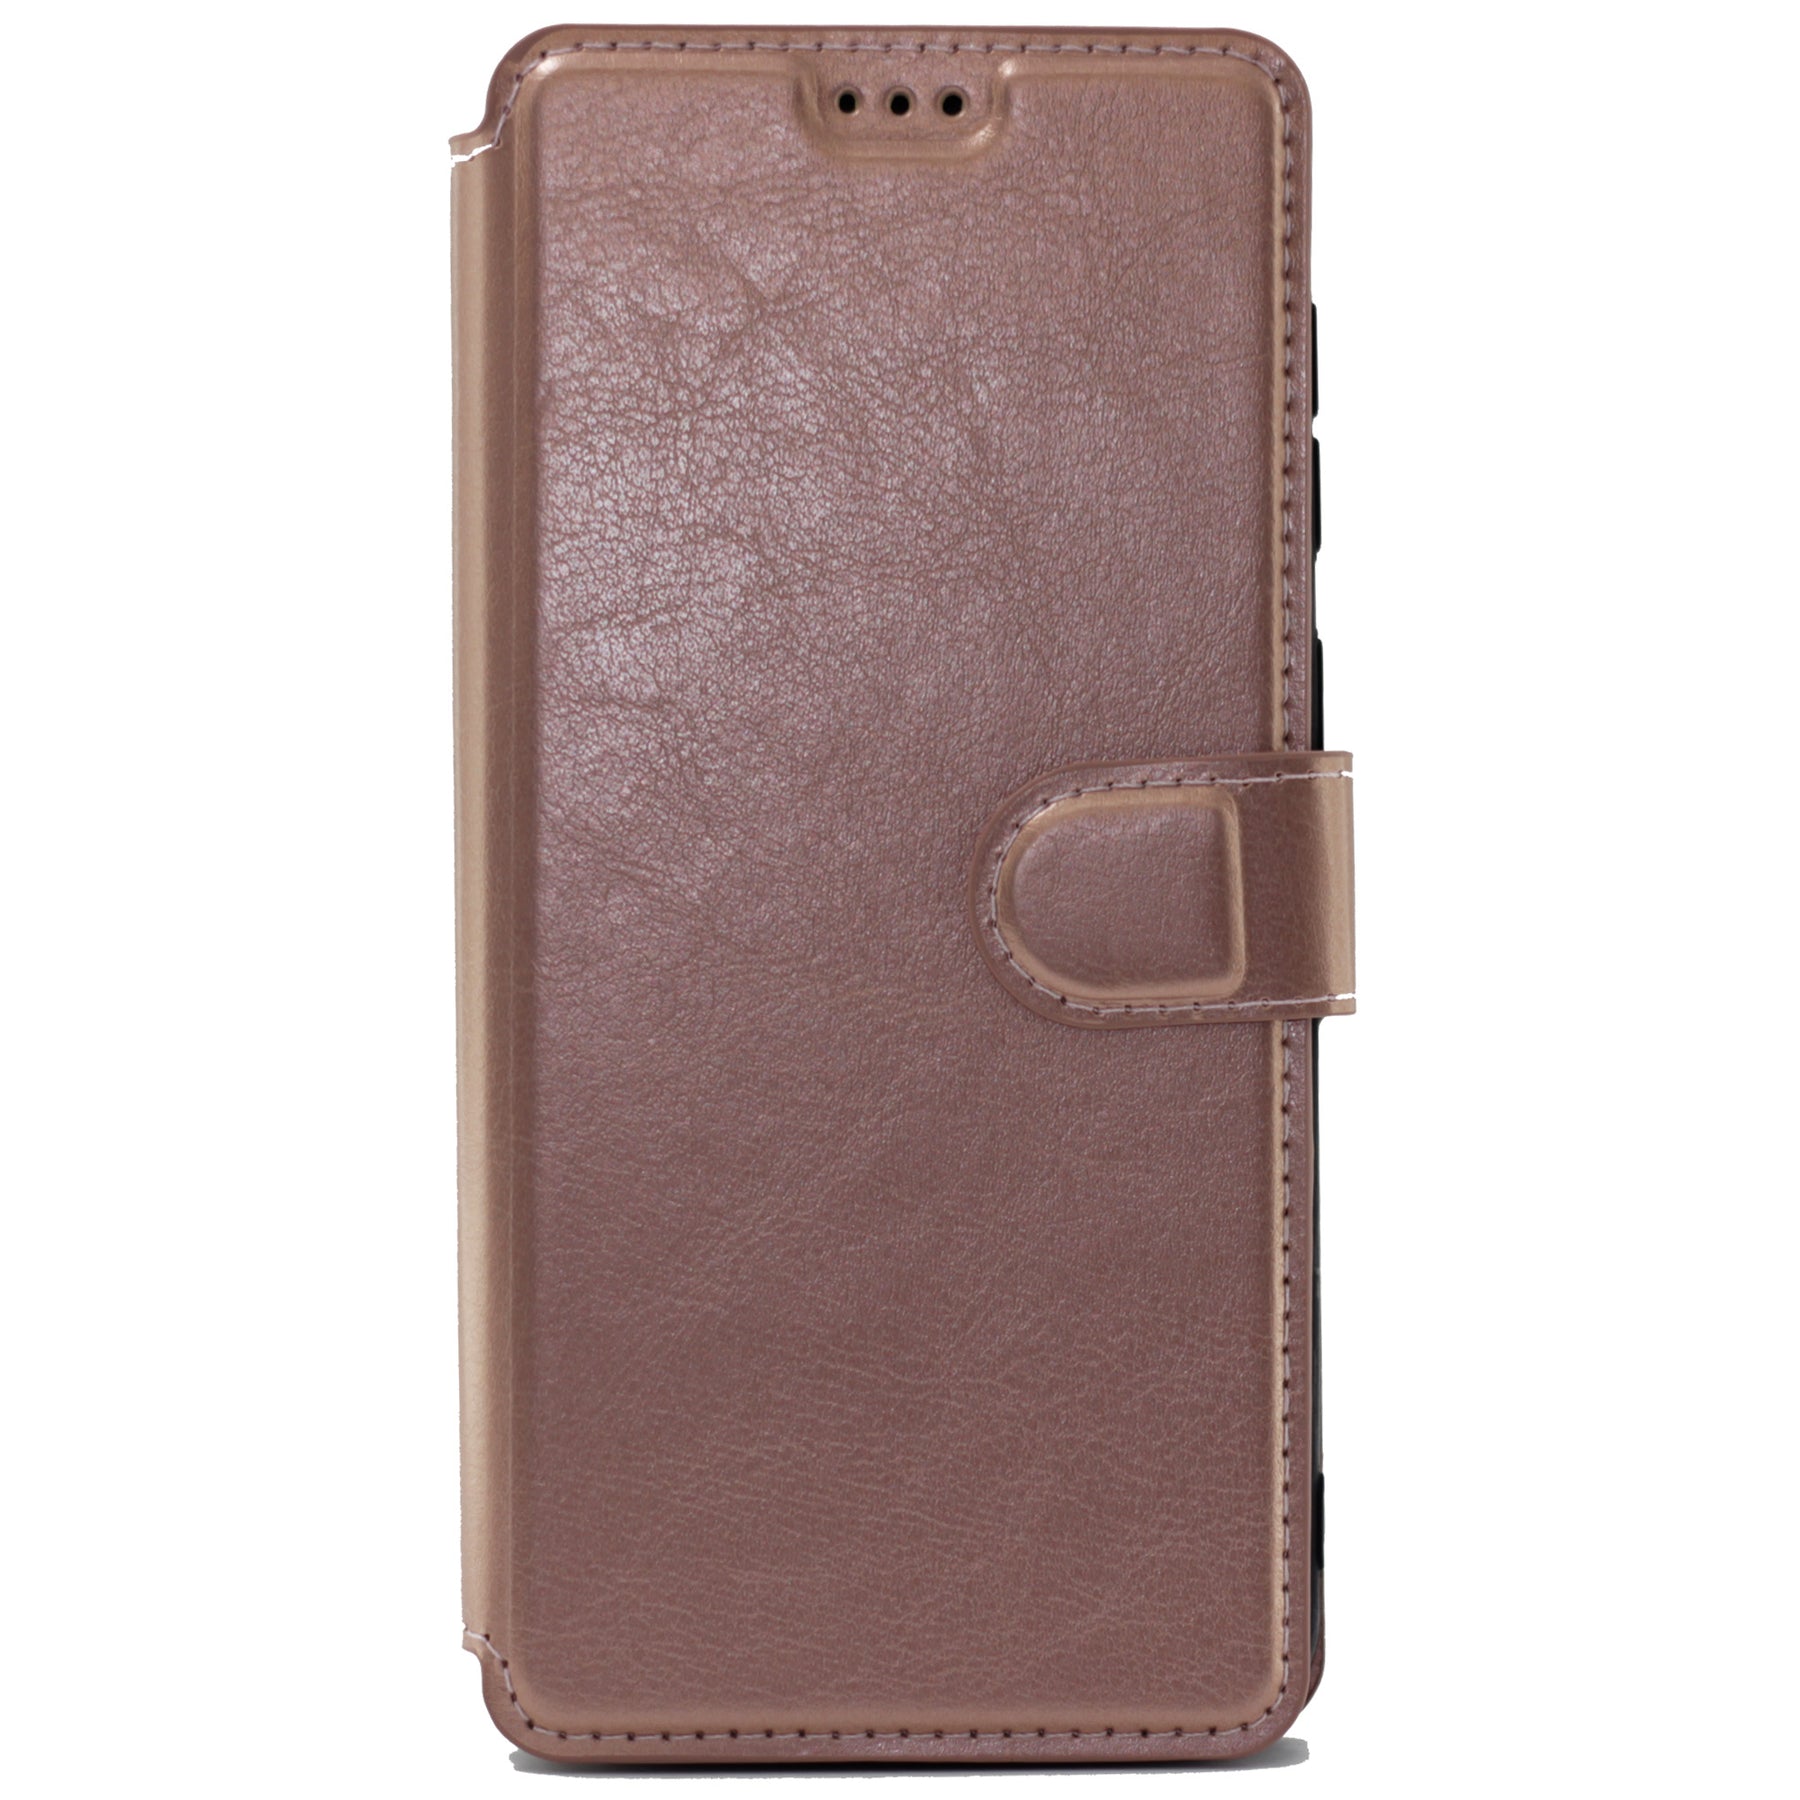 Samsung A50/a30 brown wallet case